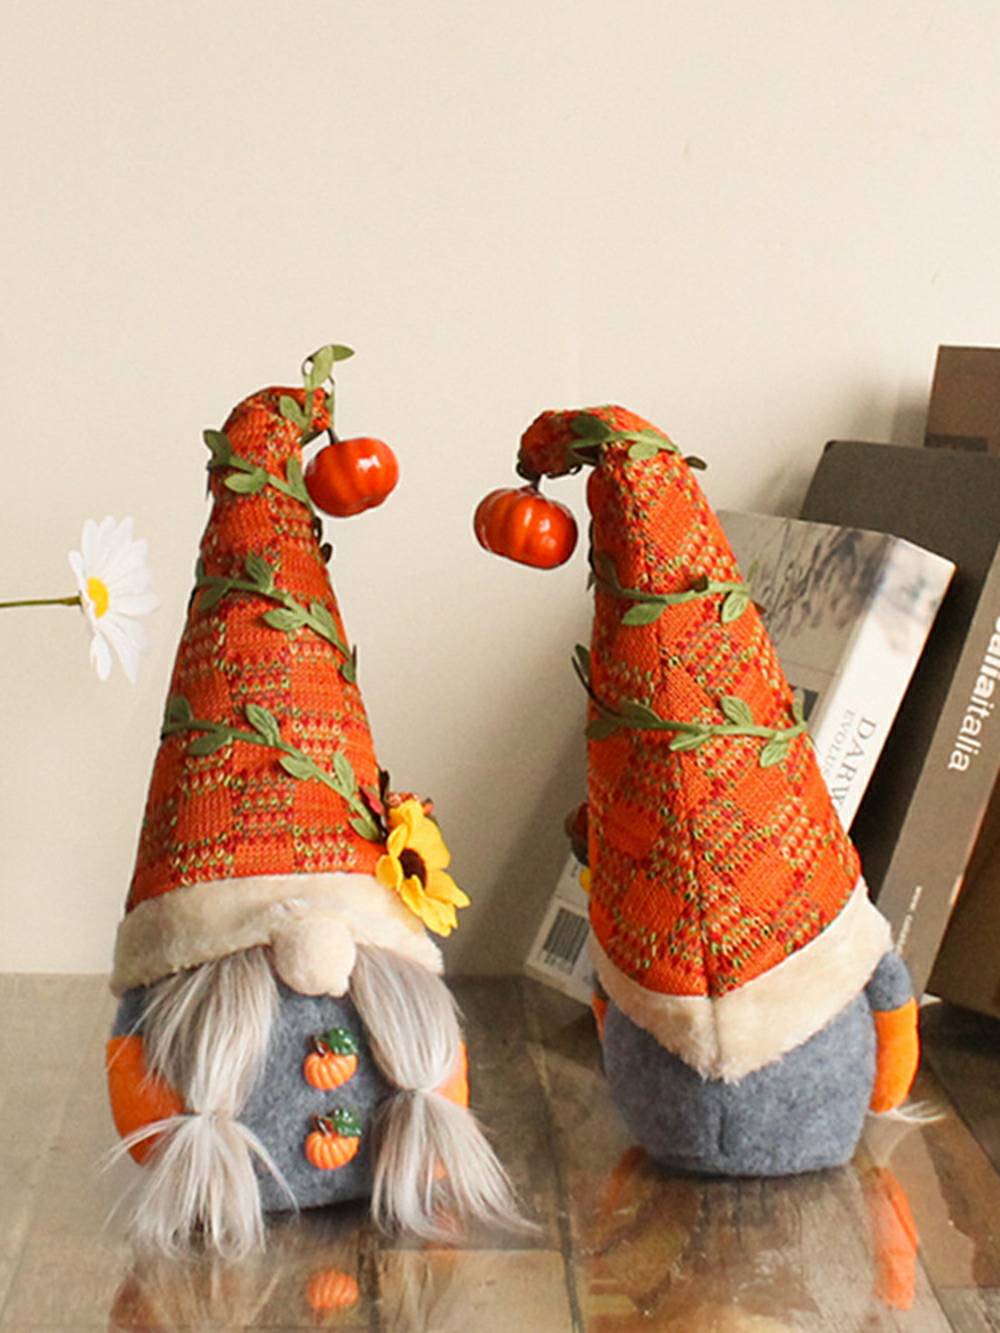 Gresskar Solsikke Gnome Alv plysj Ornament